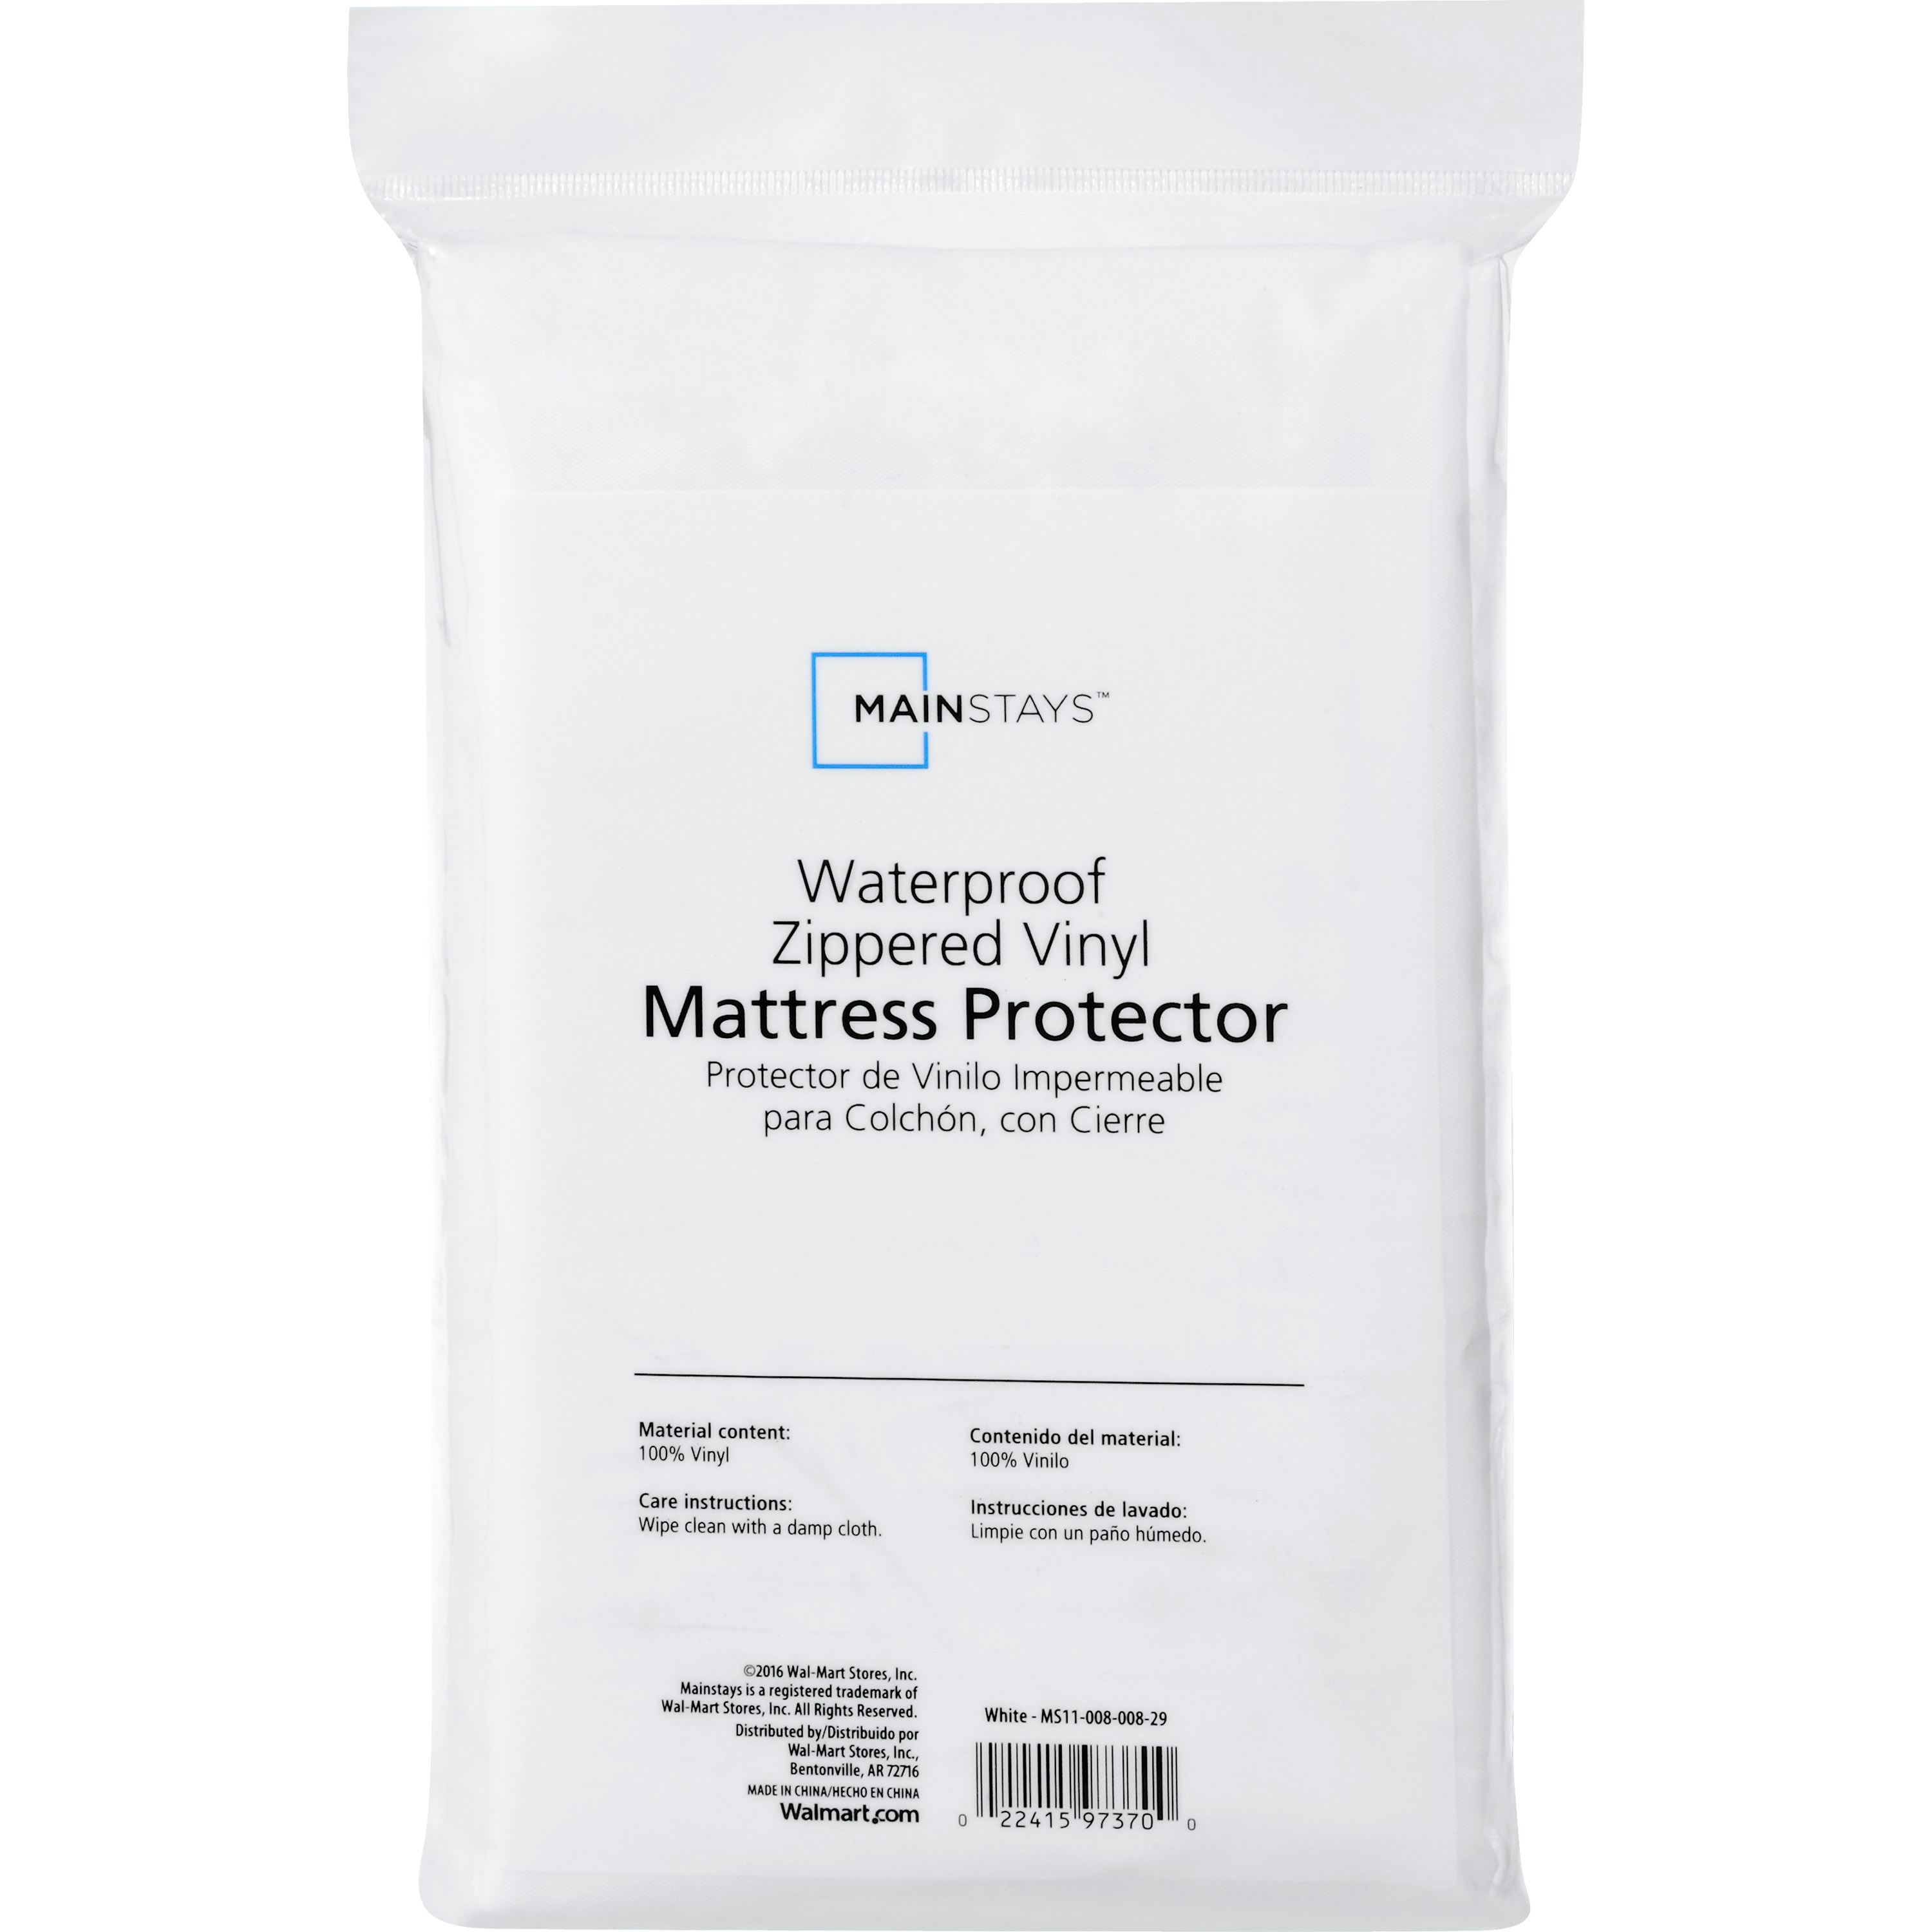 Mainstays Waterproof Zippered Vinyl Mattress Protector, Twin - image 2 of 4